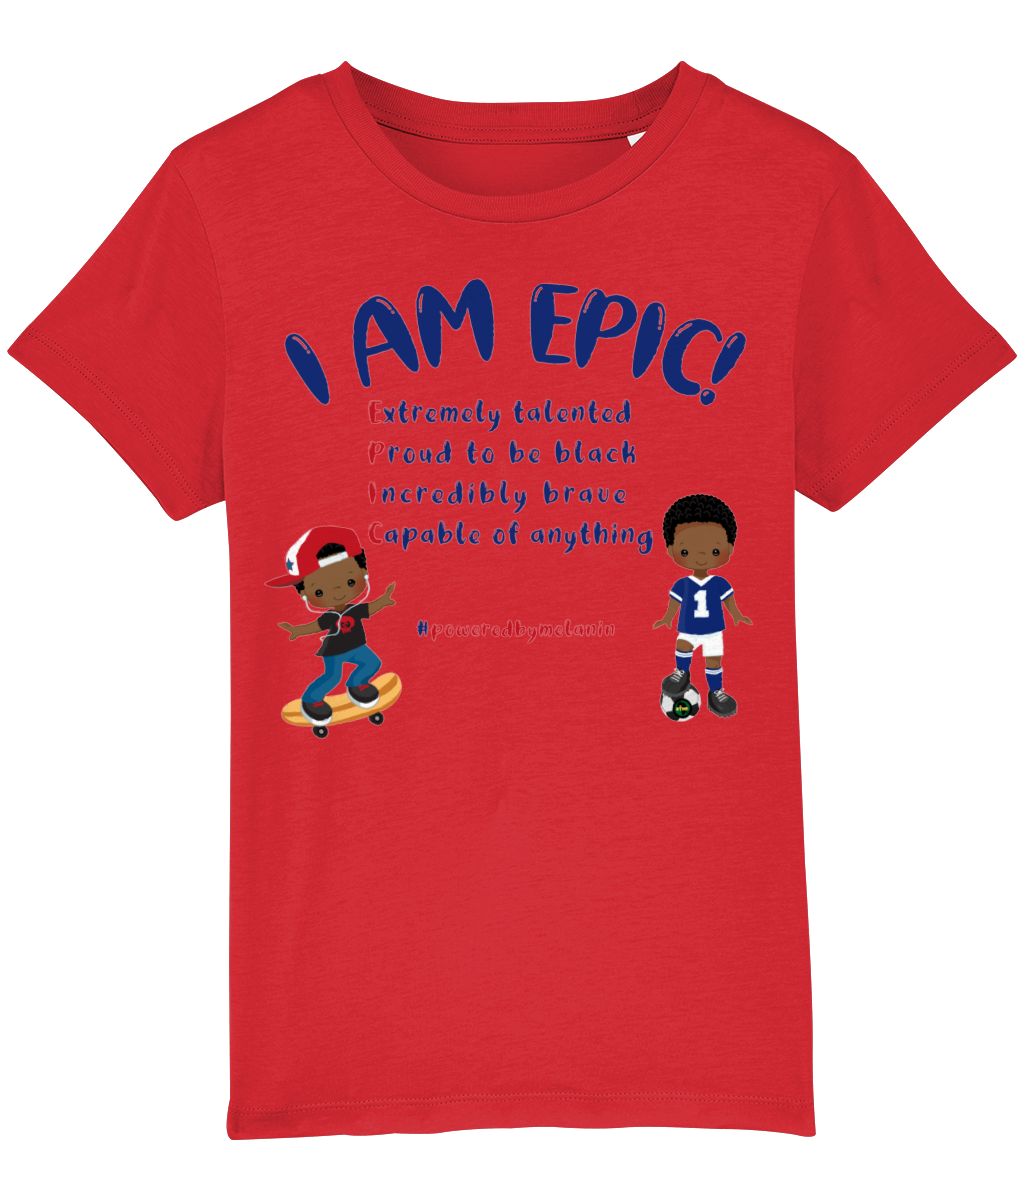 I am EPIC T Shirt | Boys